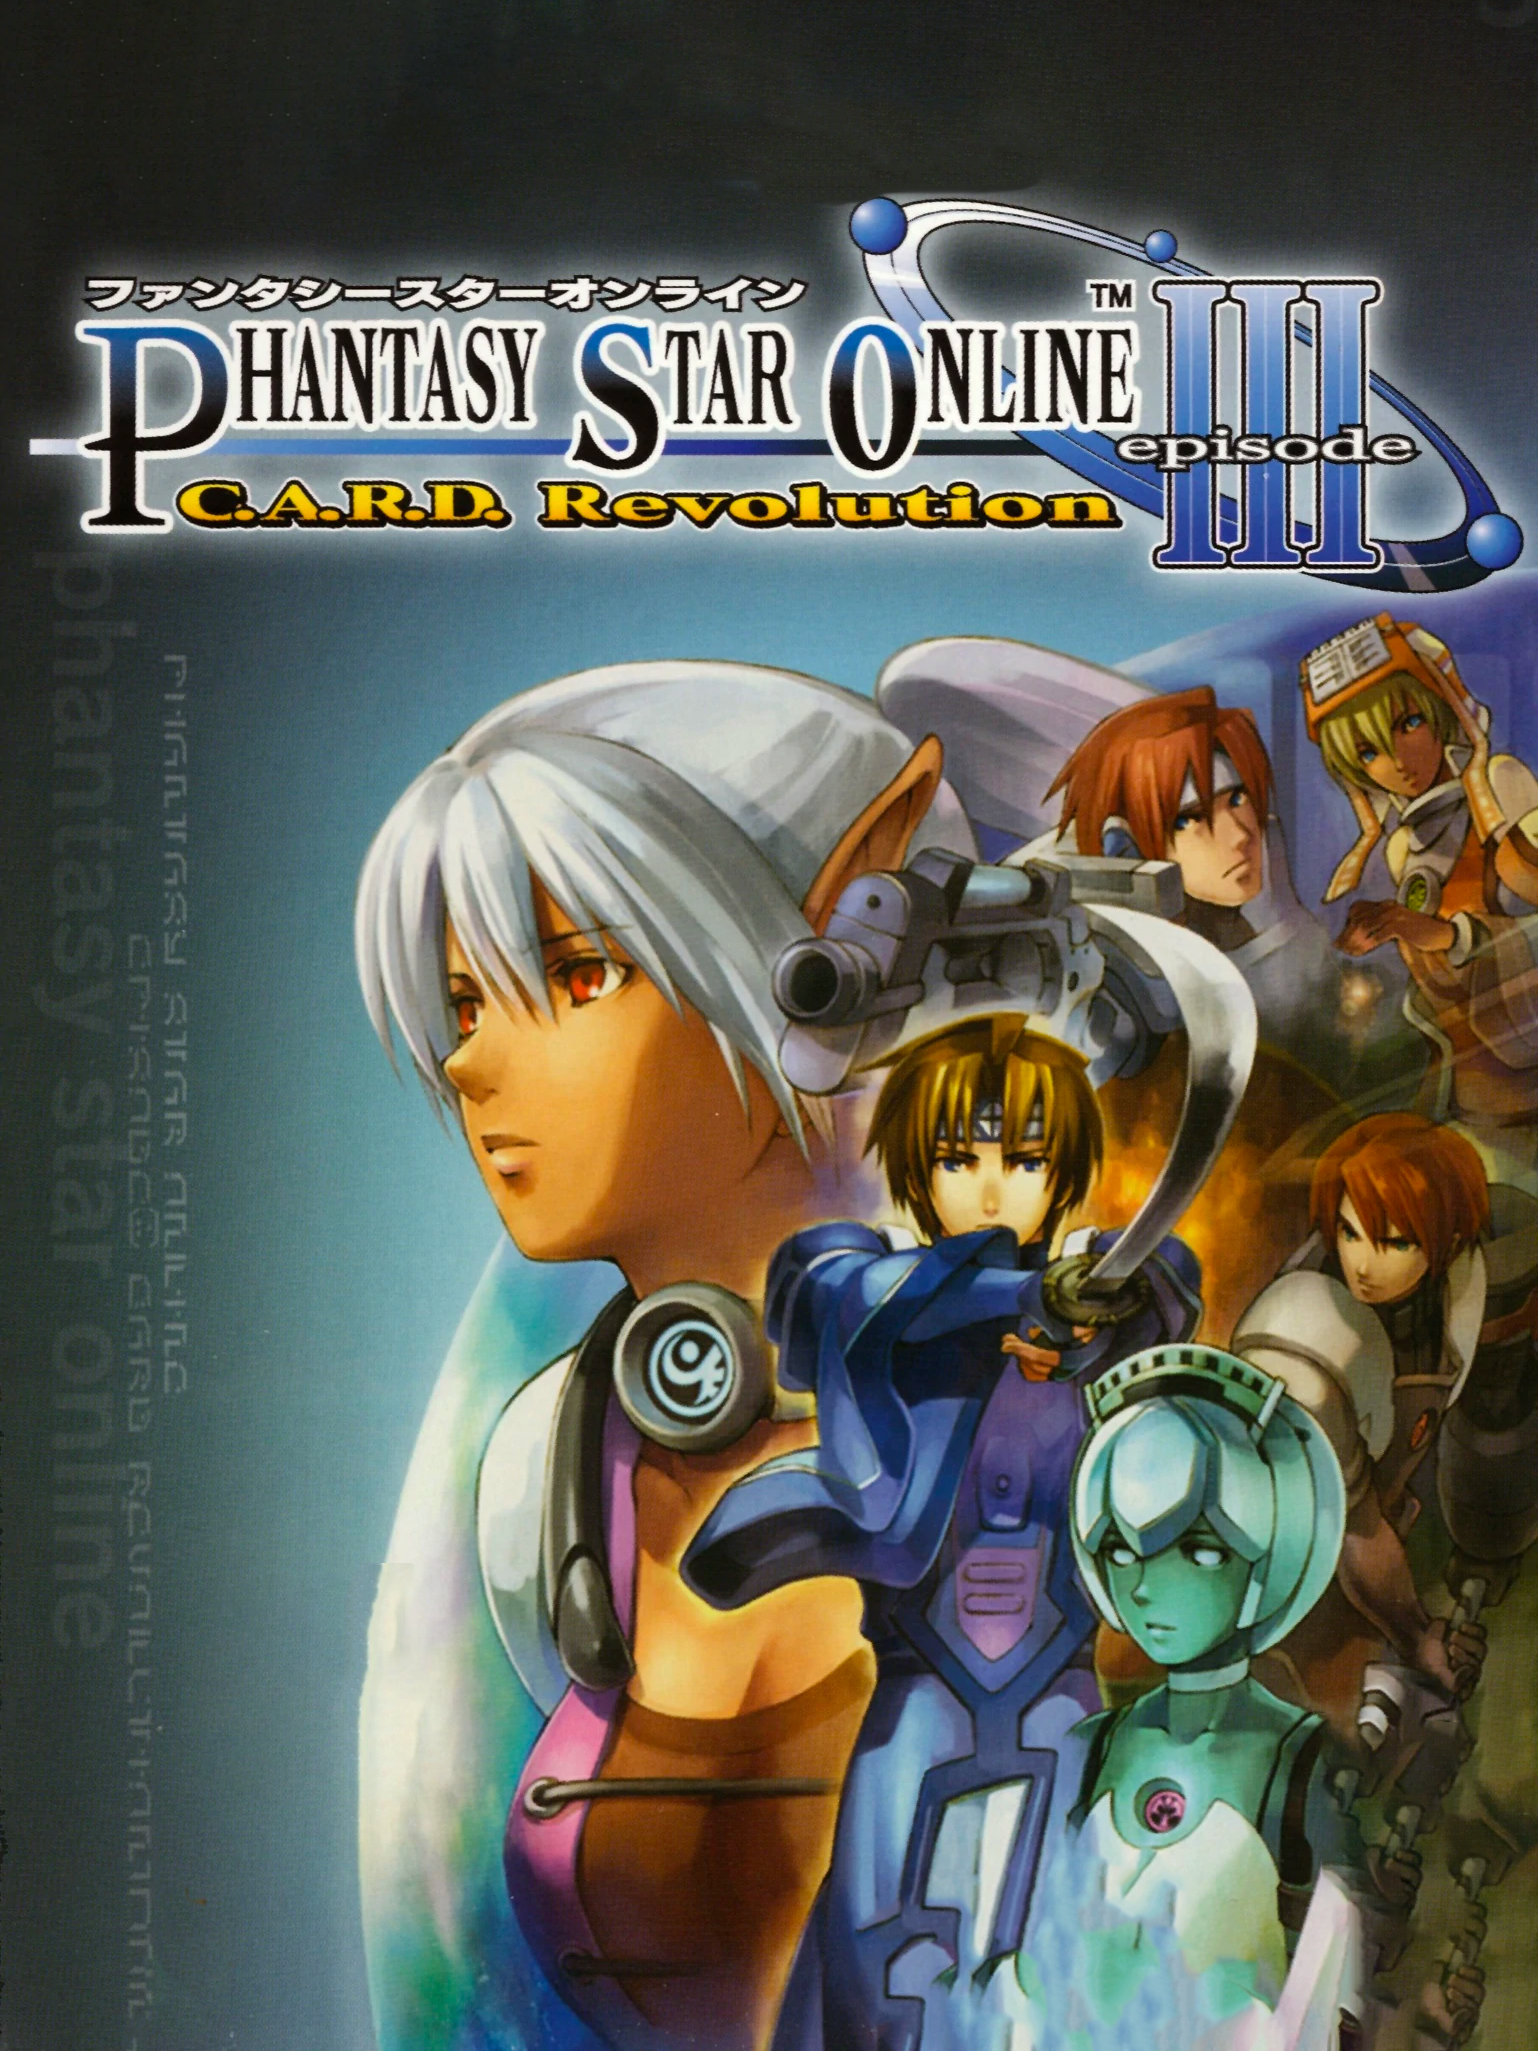 Phantasy Star Online Episode III: C.A.R.D. Revolution (2003)